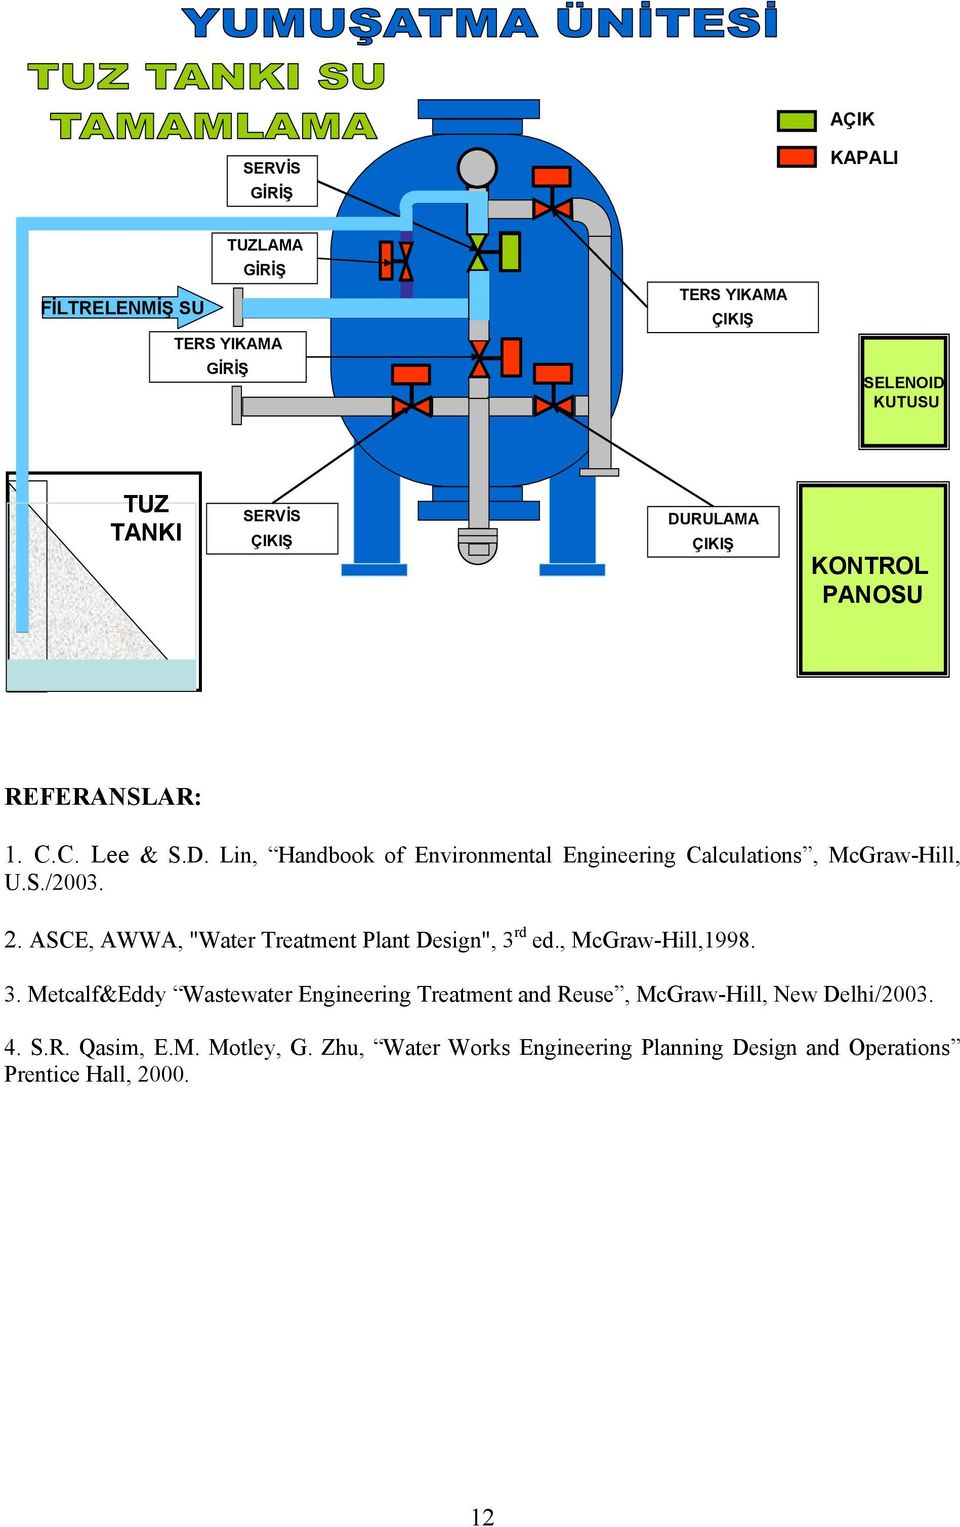 Lin, Handbook of Environmental Engineering Calculations, McGraw-Hill, U.S./00.